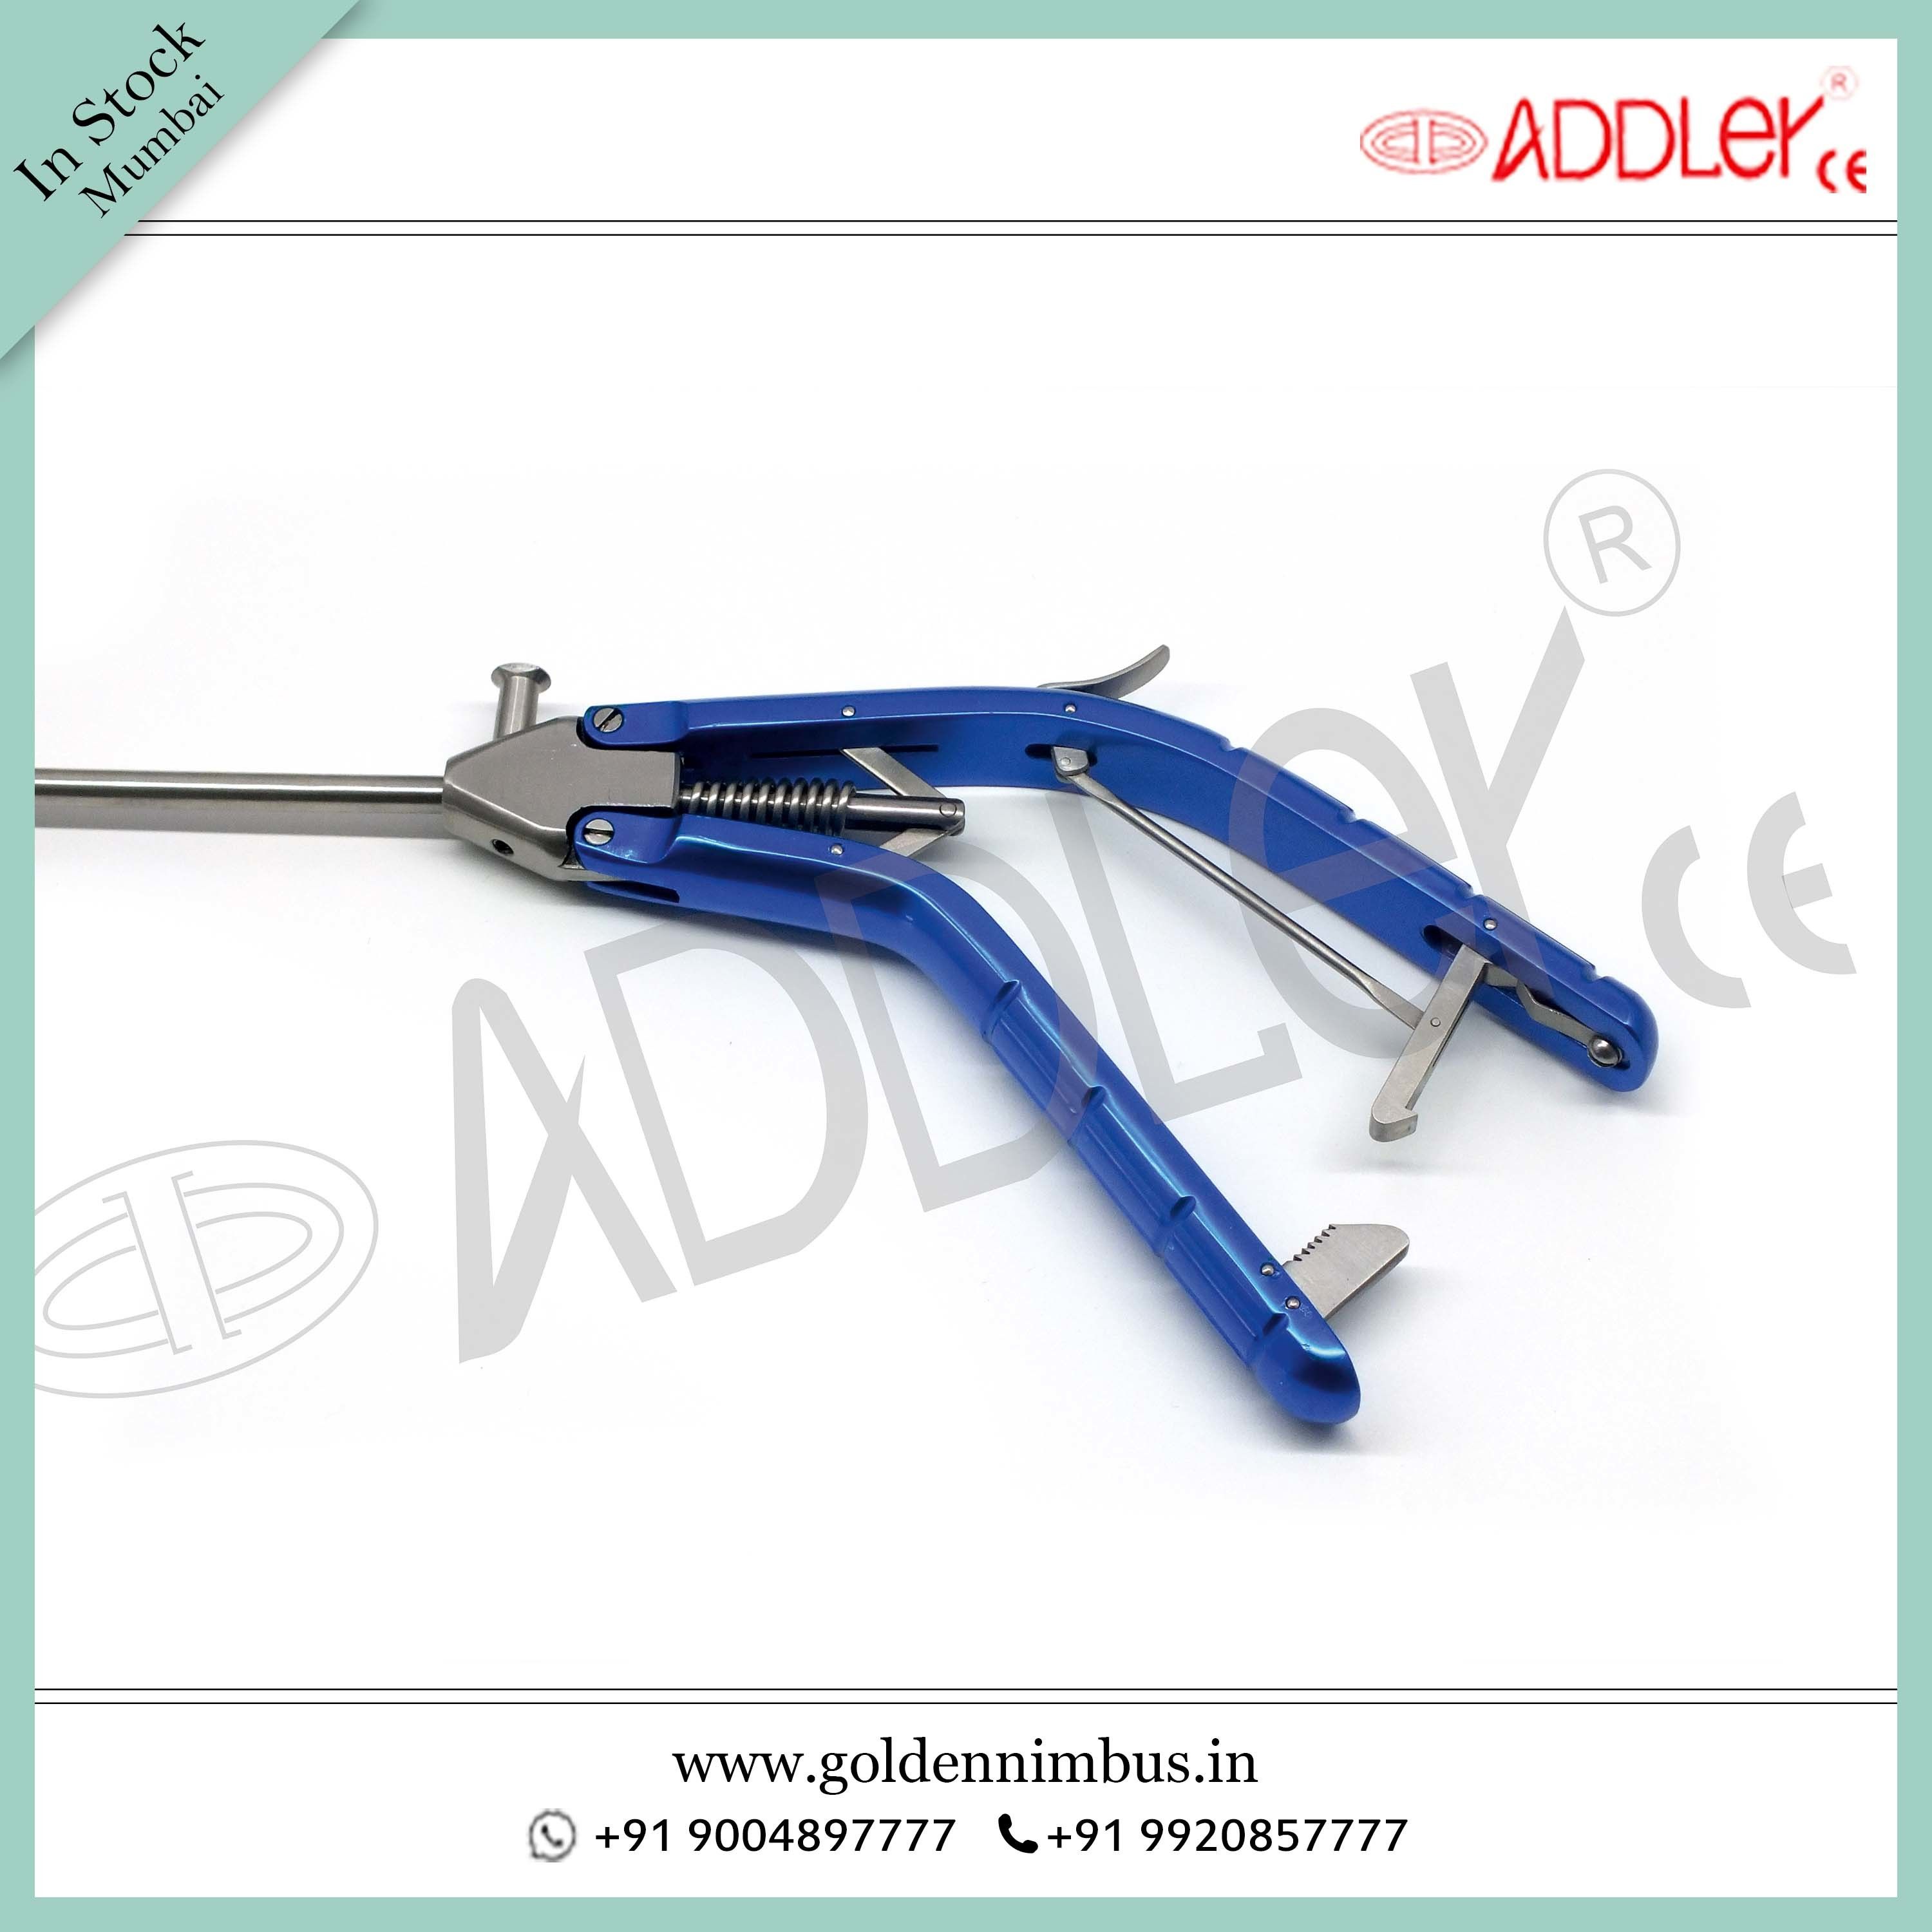 Brand New ADDLER Laparoscopic 5mm Straight Needle Holder Storz Type Handle